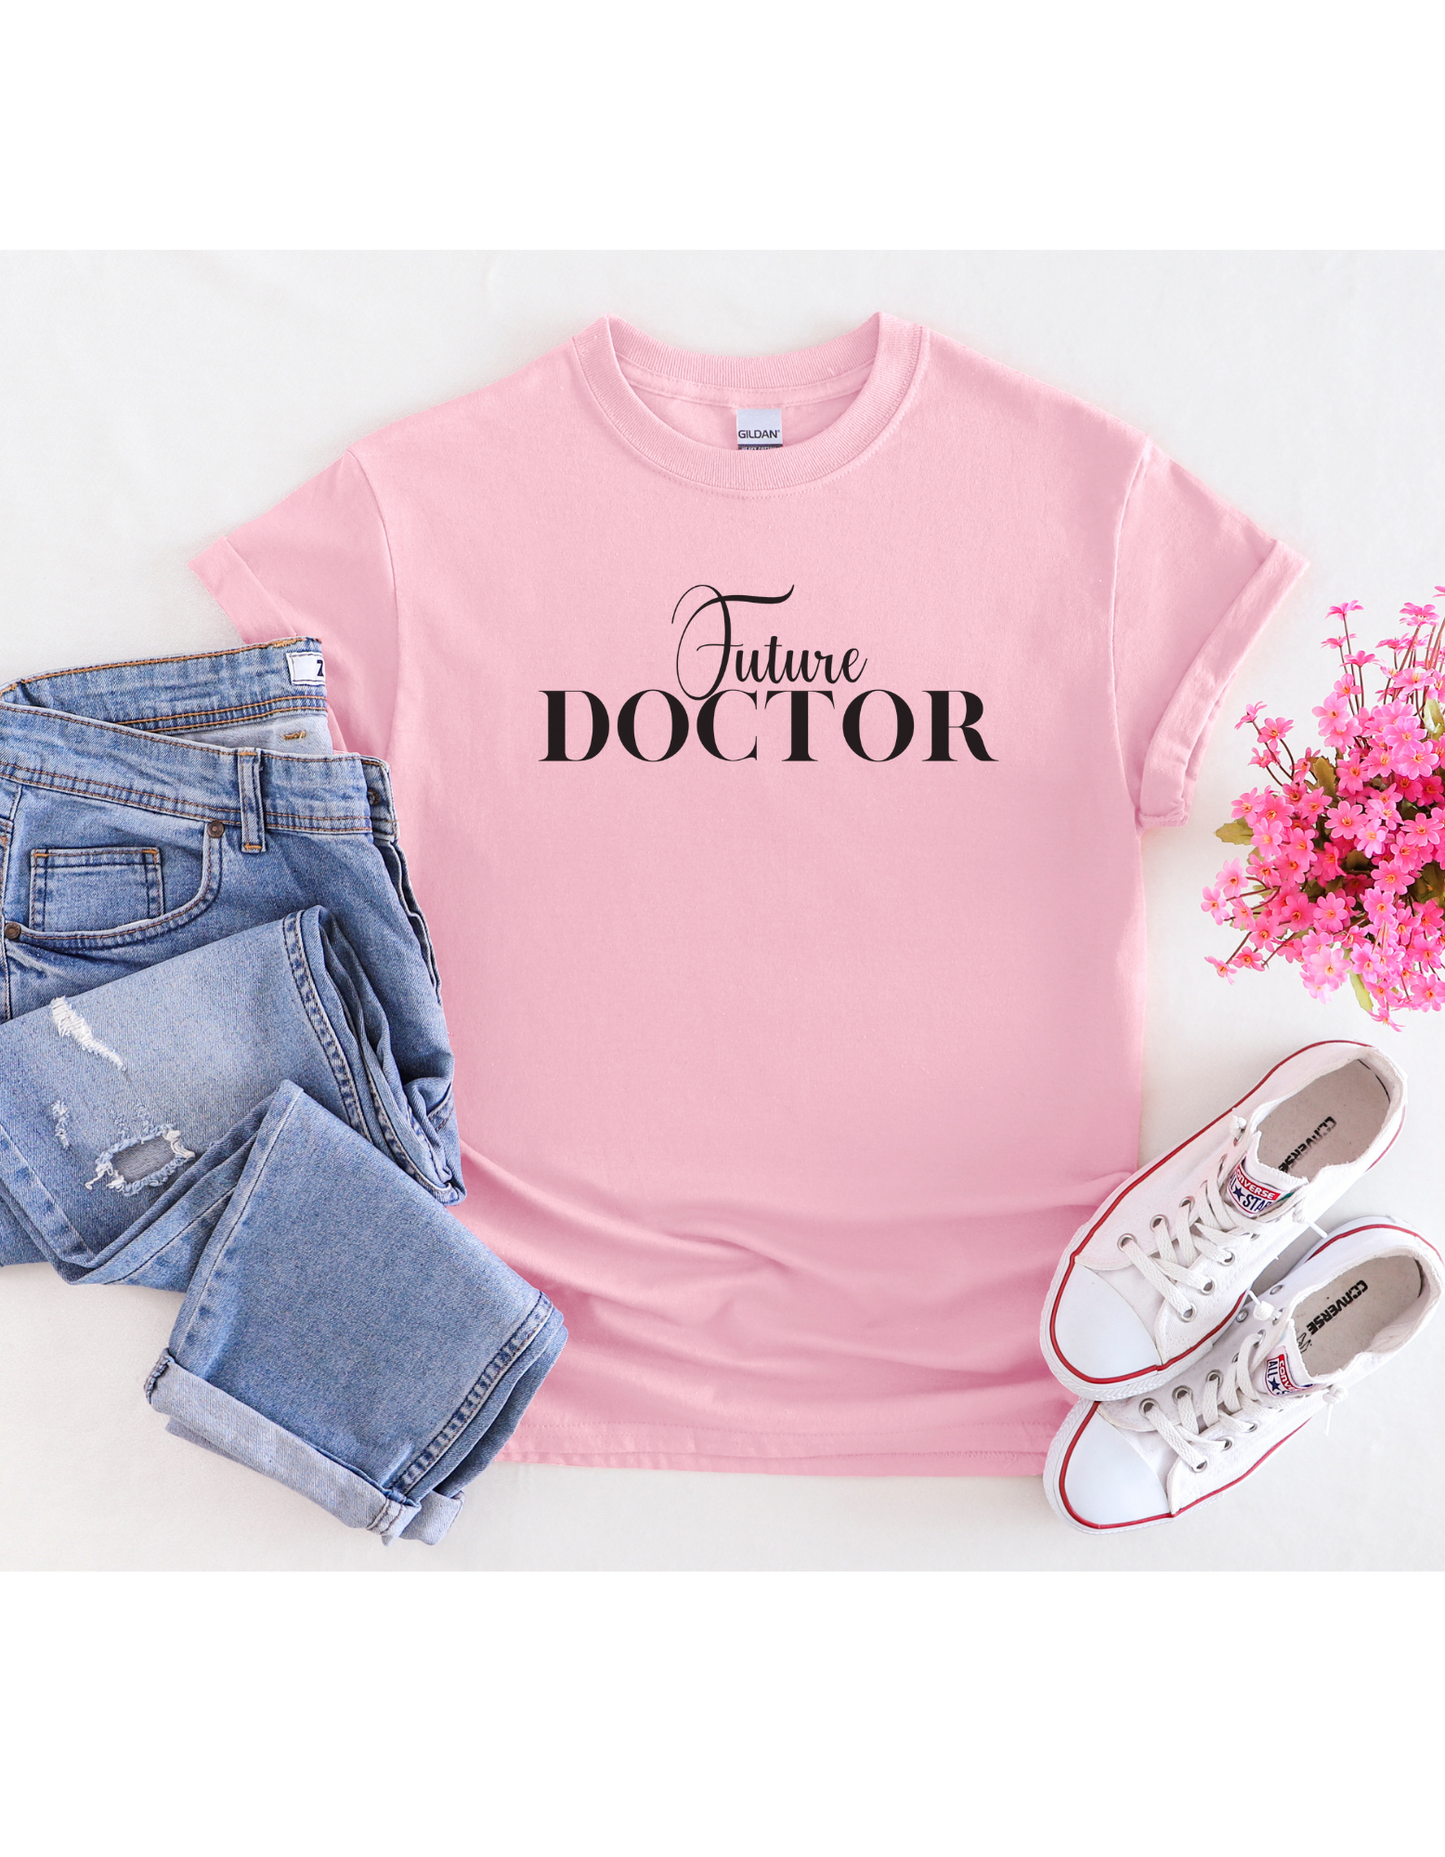 Future Doctor T-Shirt, Medical Student Shirt, Medical School Shirt, Doctor in Progress, Future Doctor Gift,